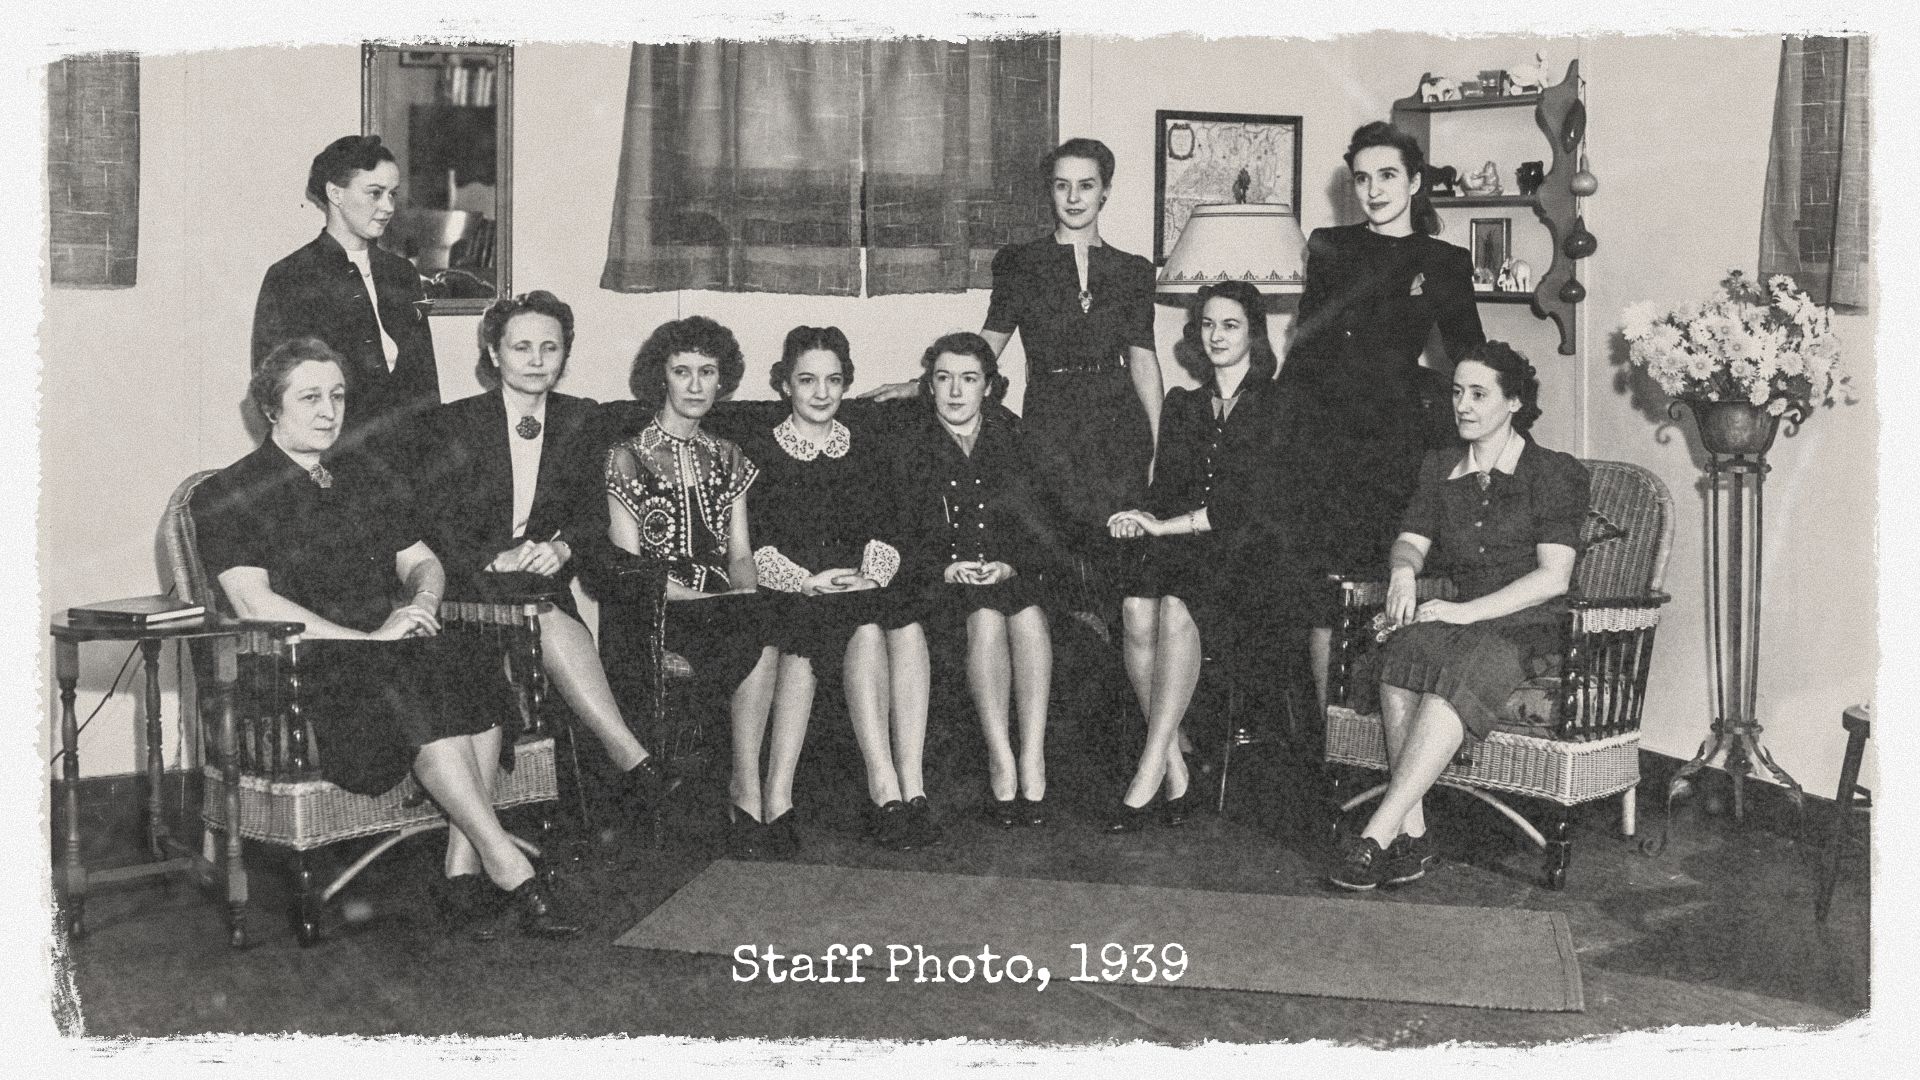 Staff Photo, 1939